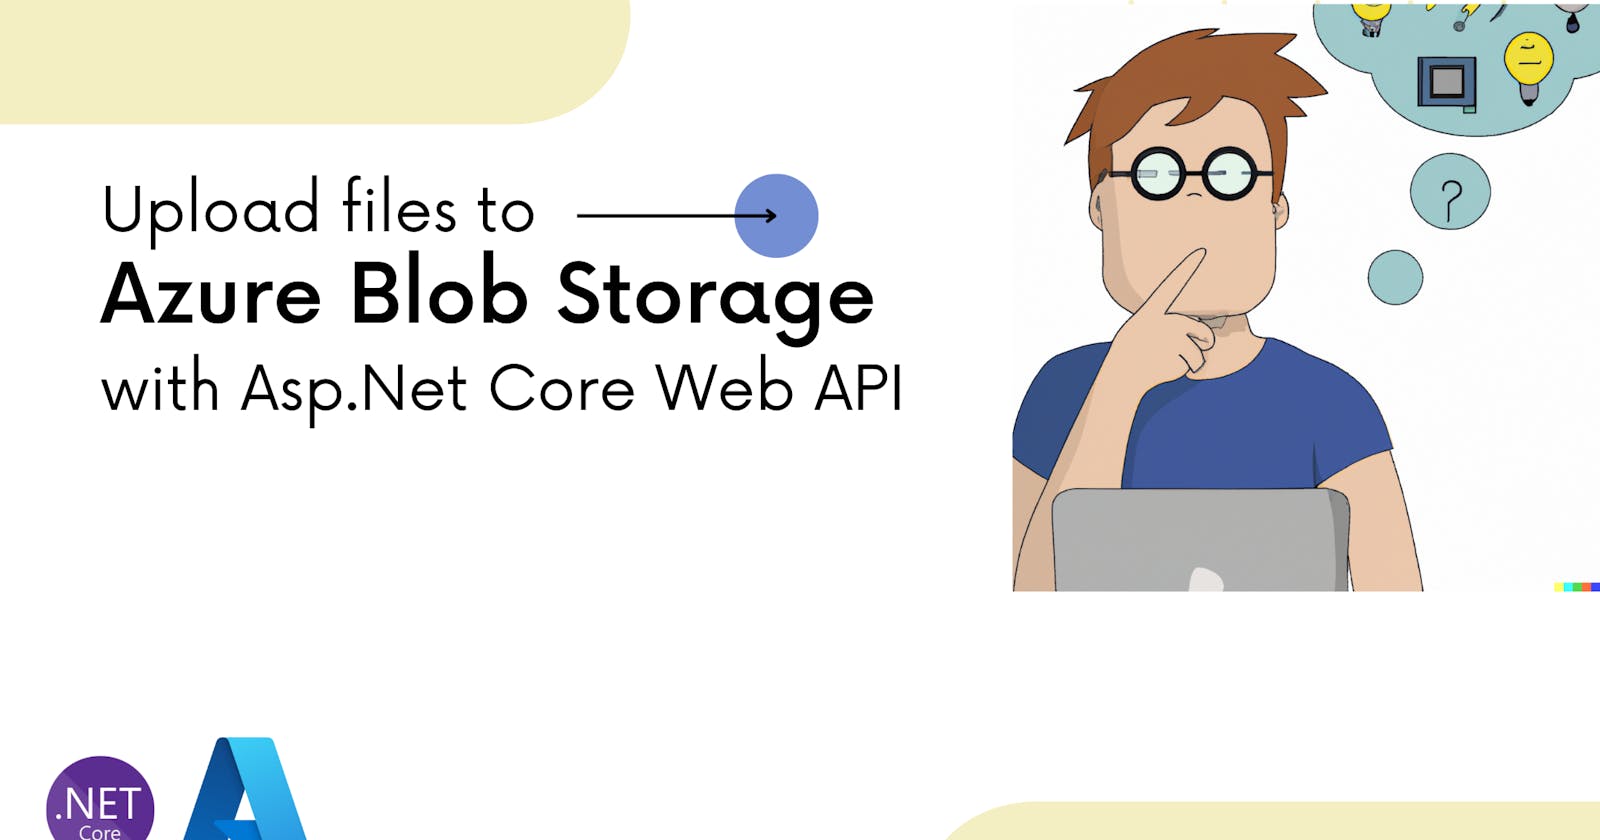 Upload files to Azure Blob Storage using Asp.Net Core Web API